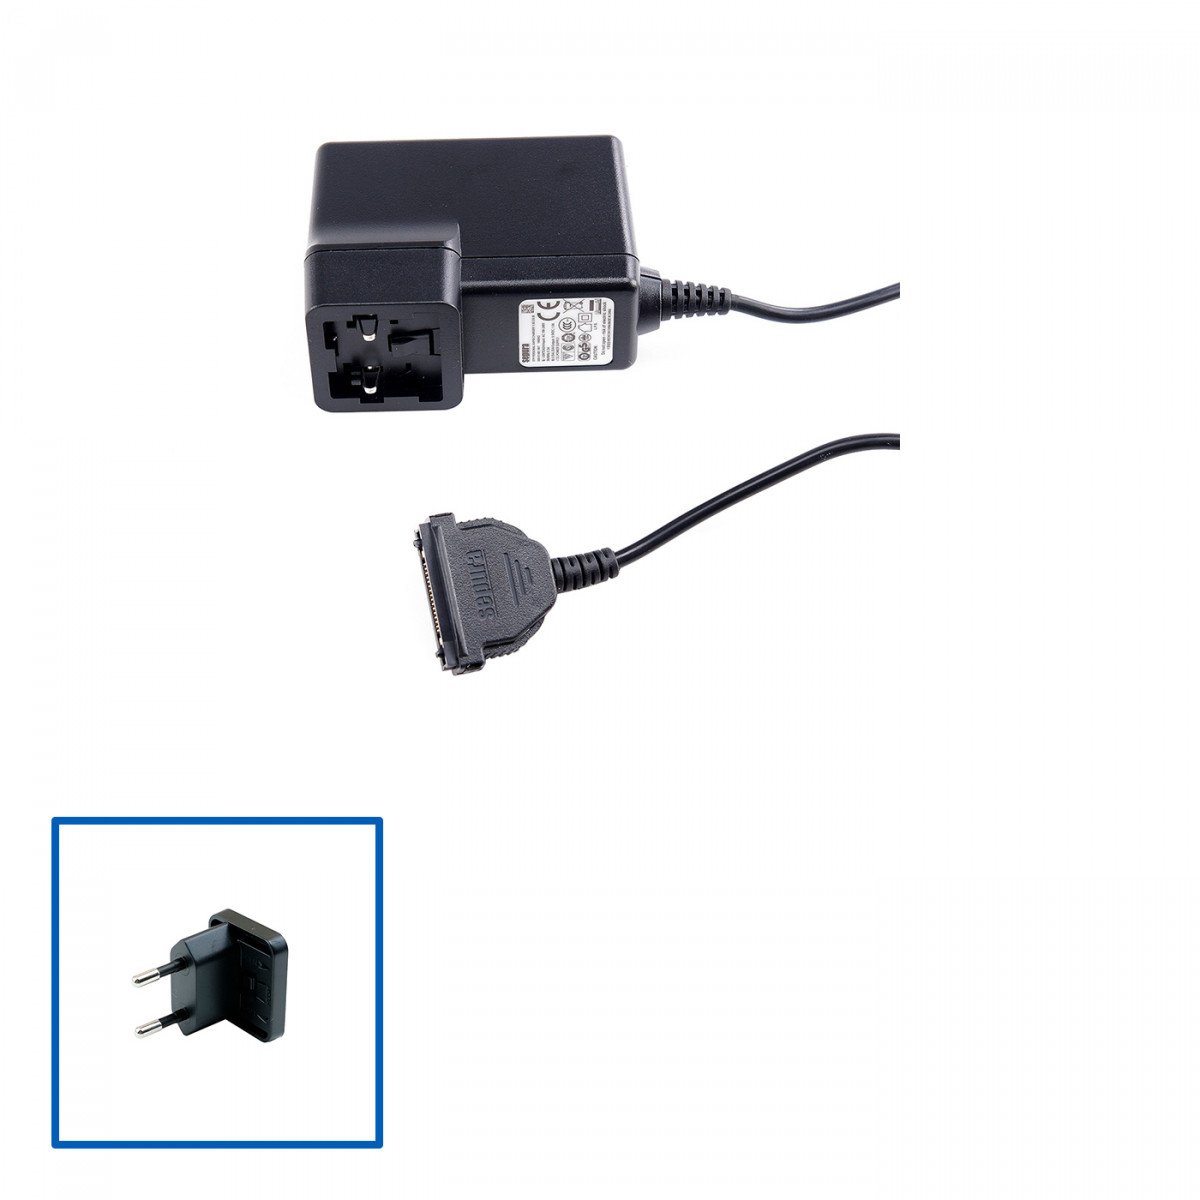 SEPURA single quick charger 100-240V, direct connection for Sepura STP8/9000 E16865